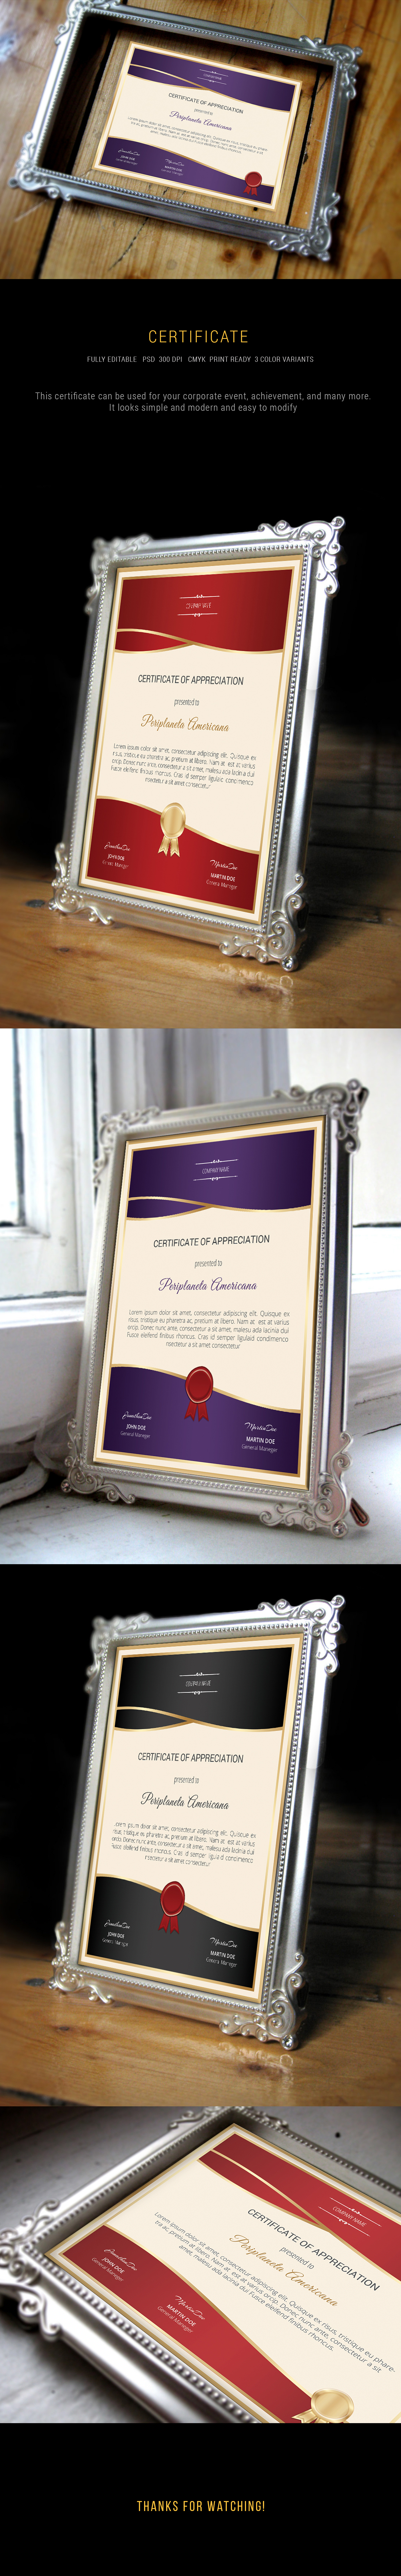 certificate award reward educational certificate